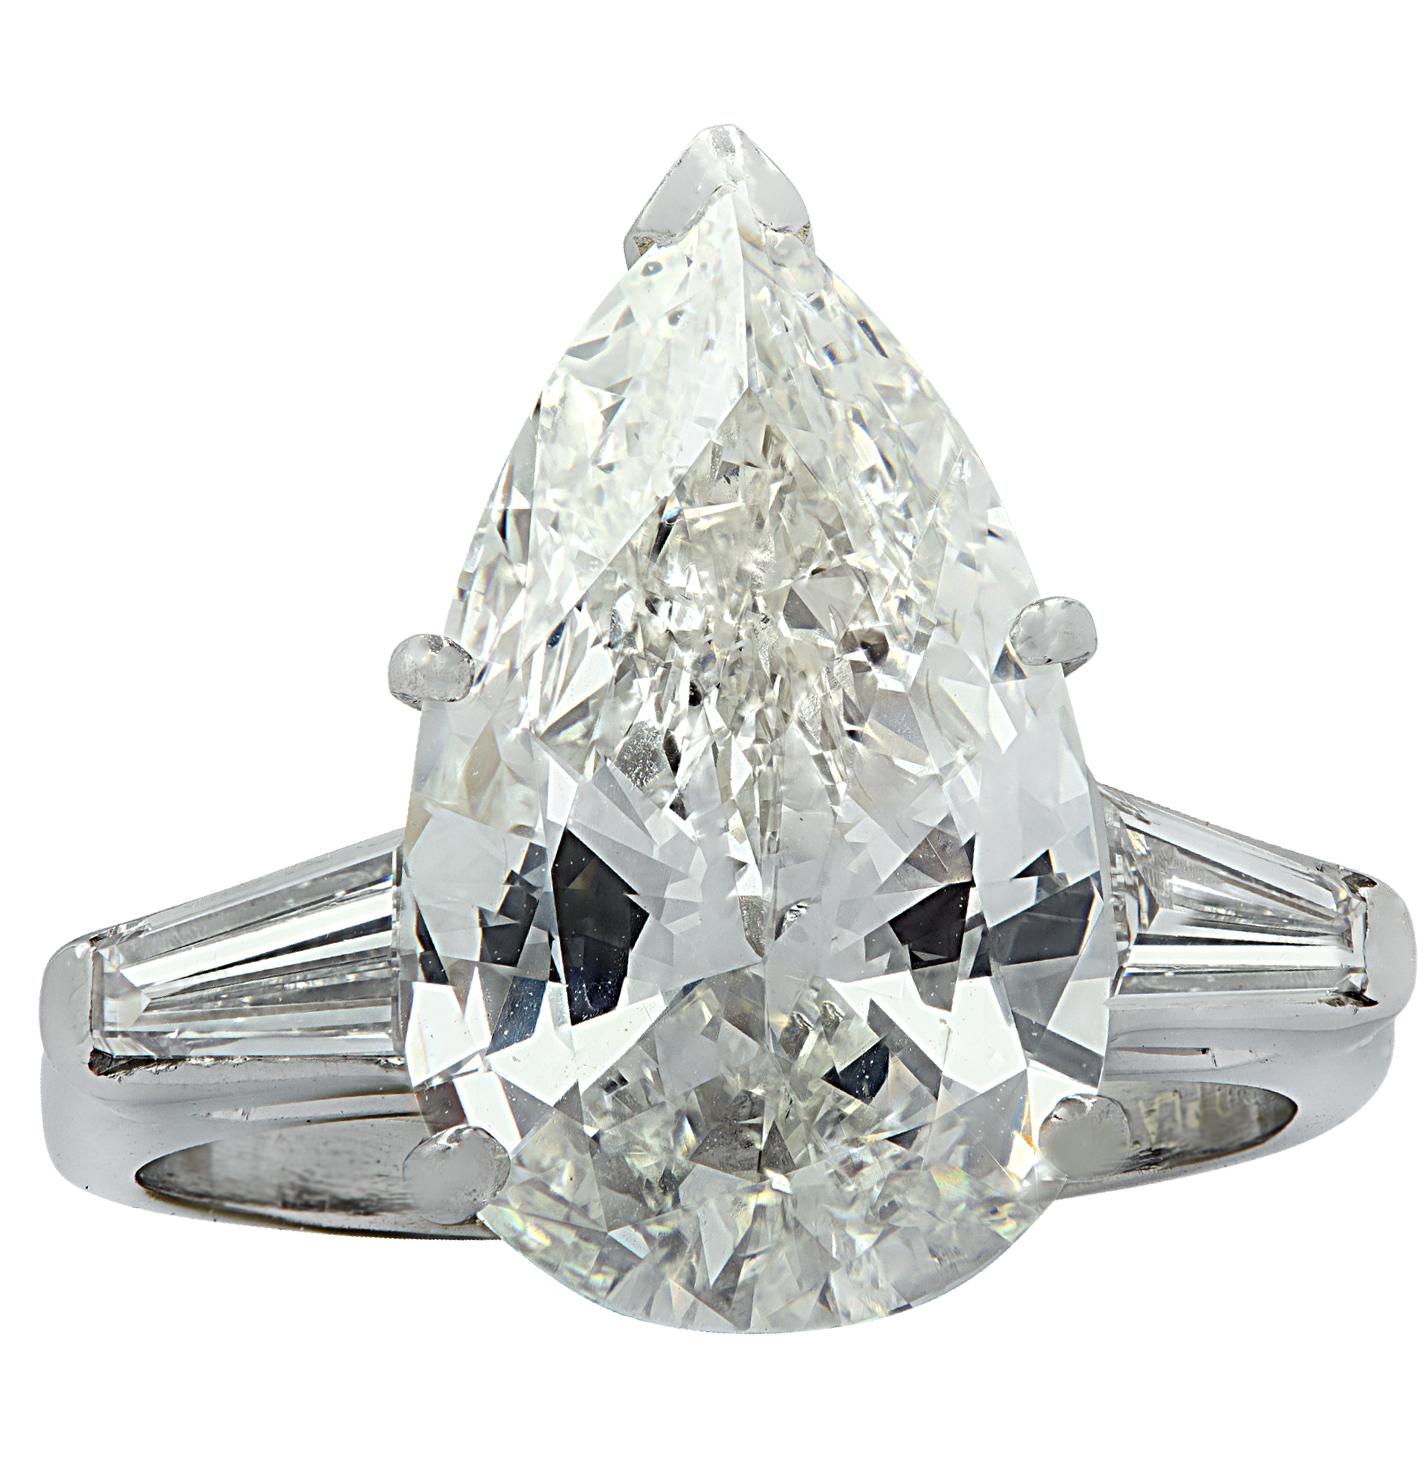 3.5 carat pear shaped diamond ring